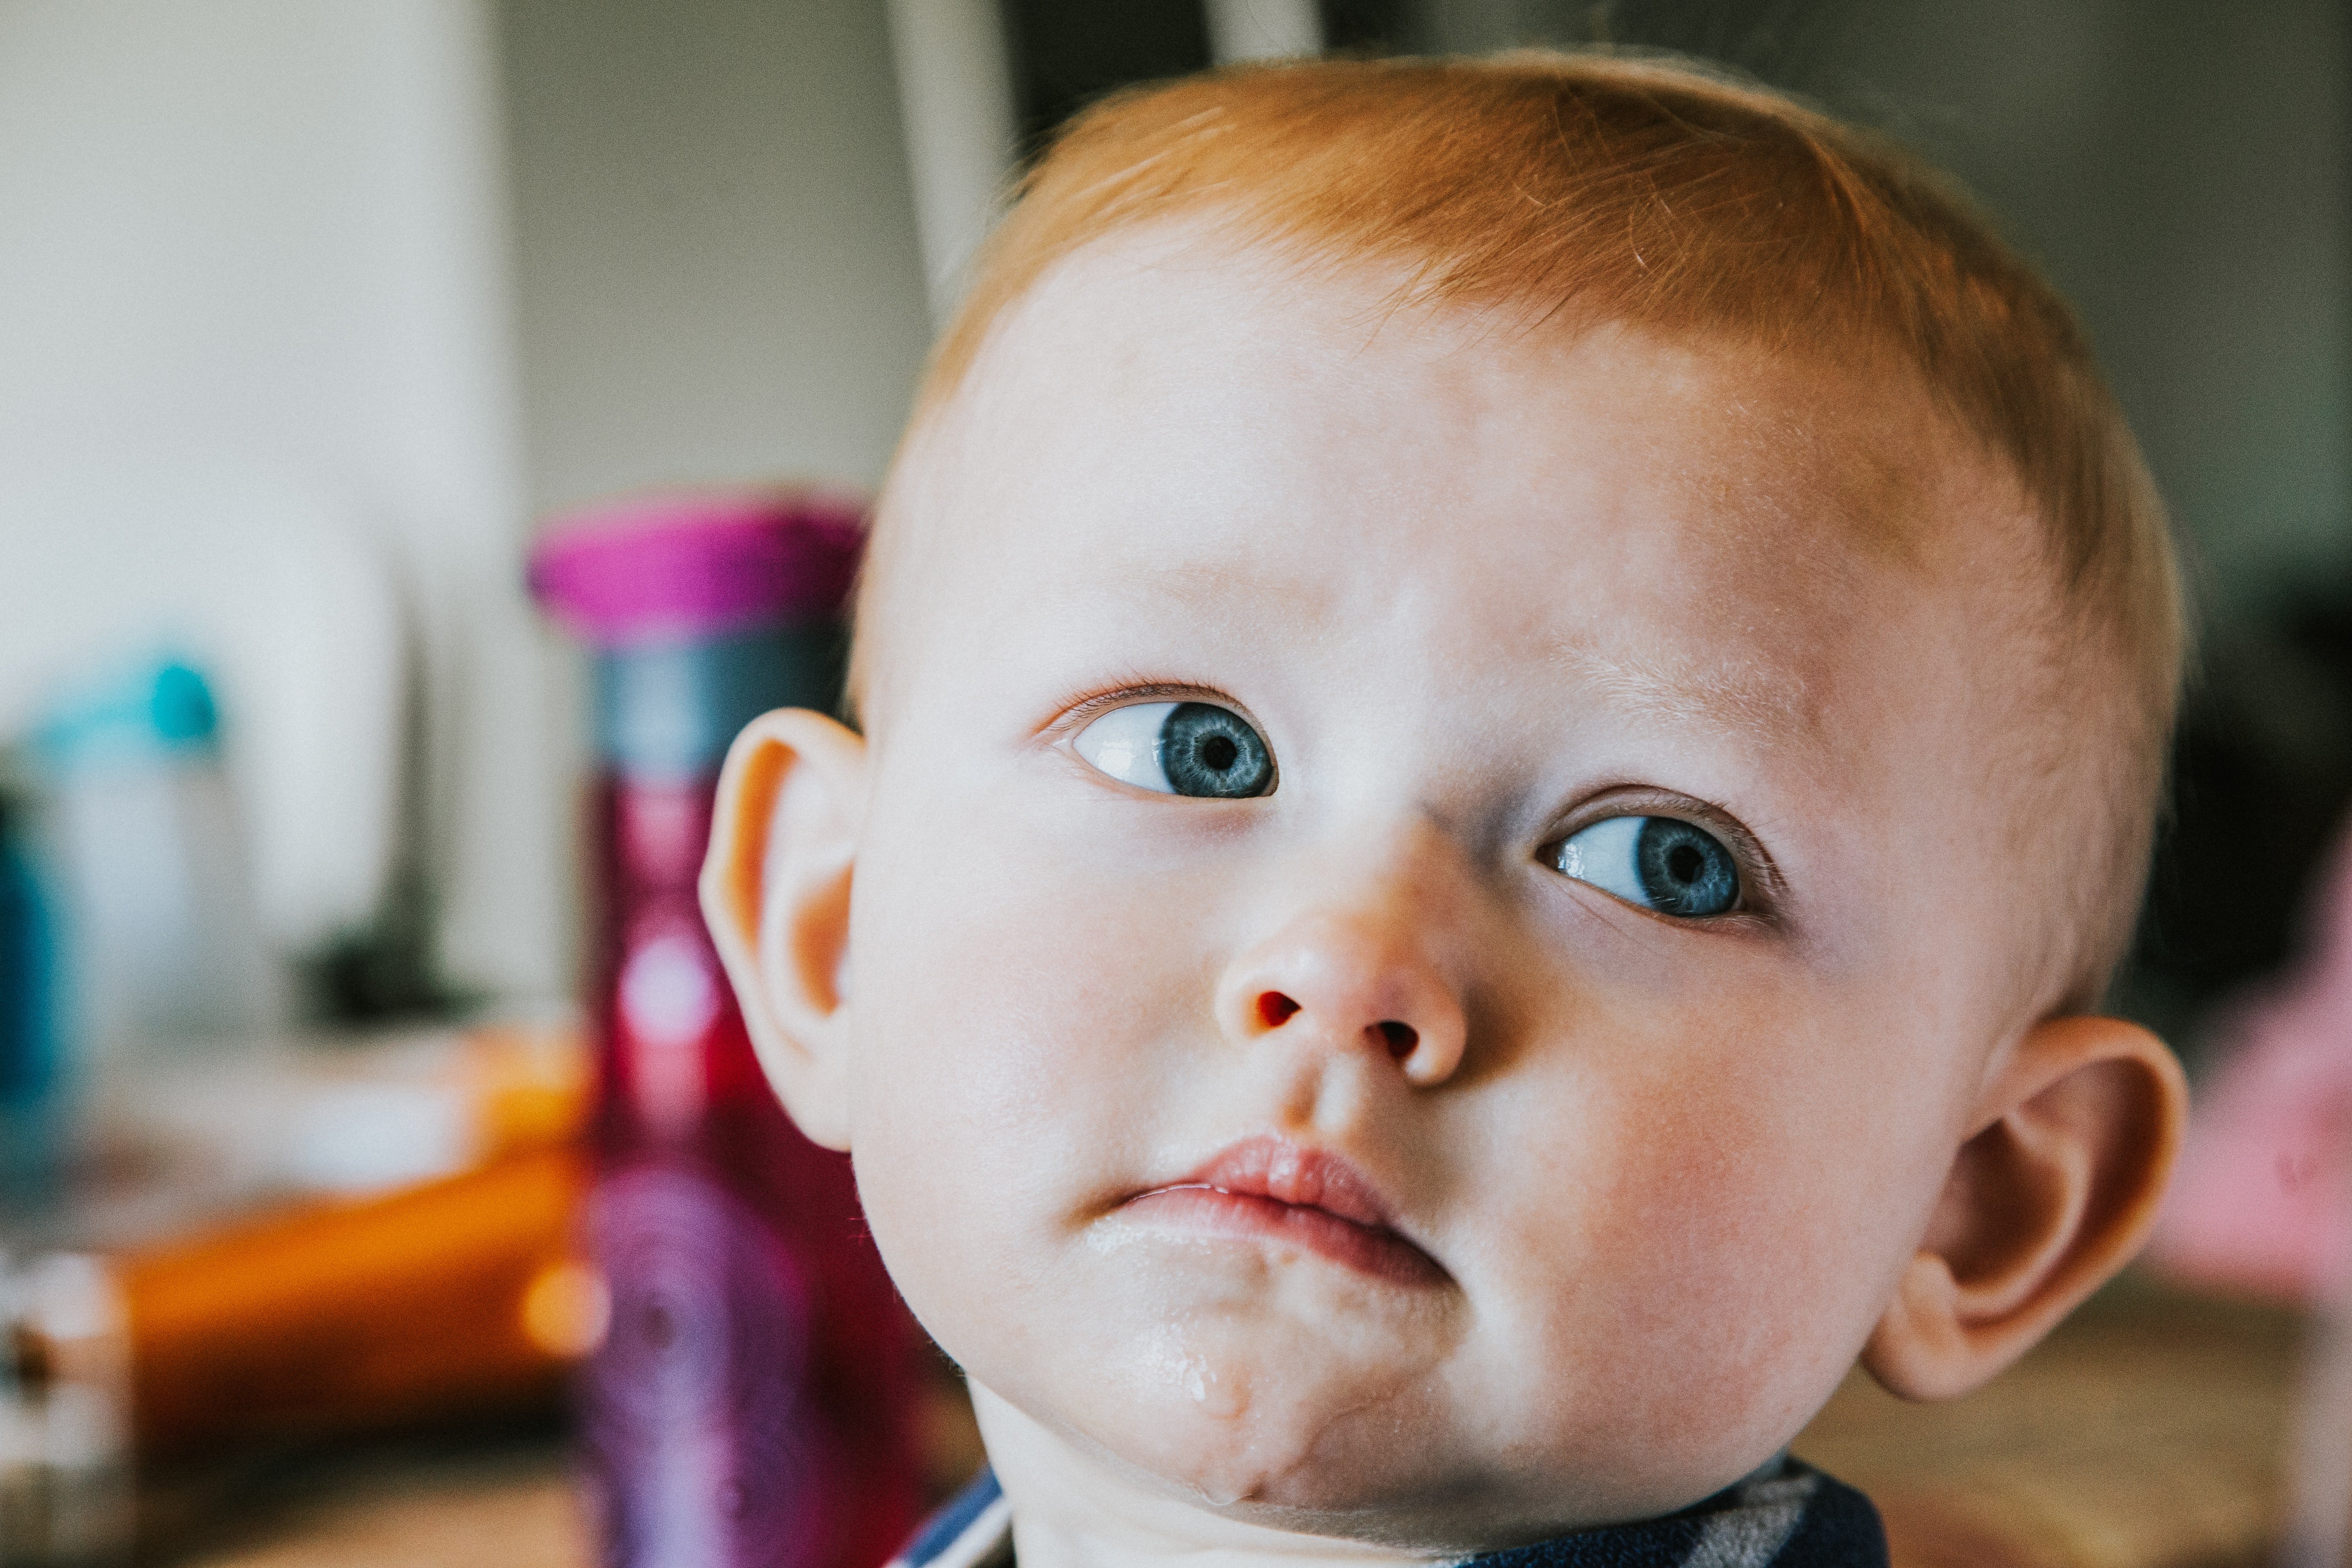 Niño de cabello rojizo y ojos azules. | Foto: Unsplash